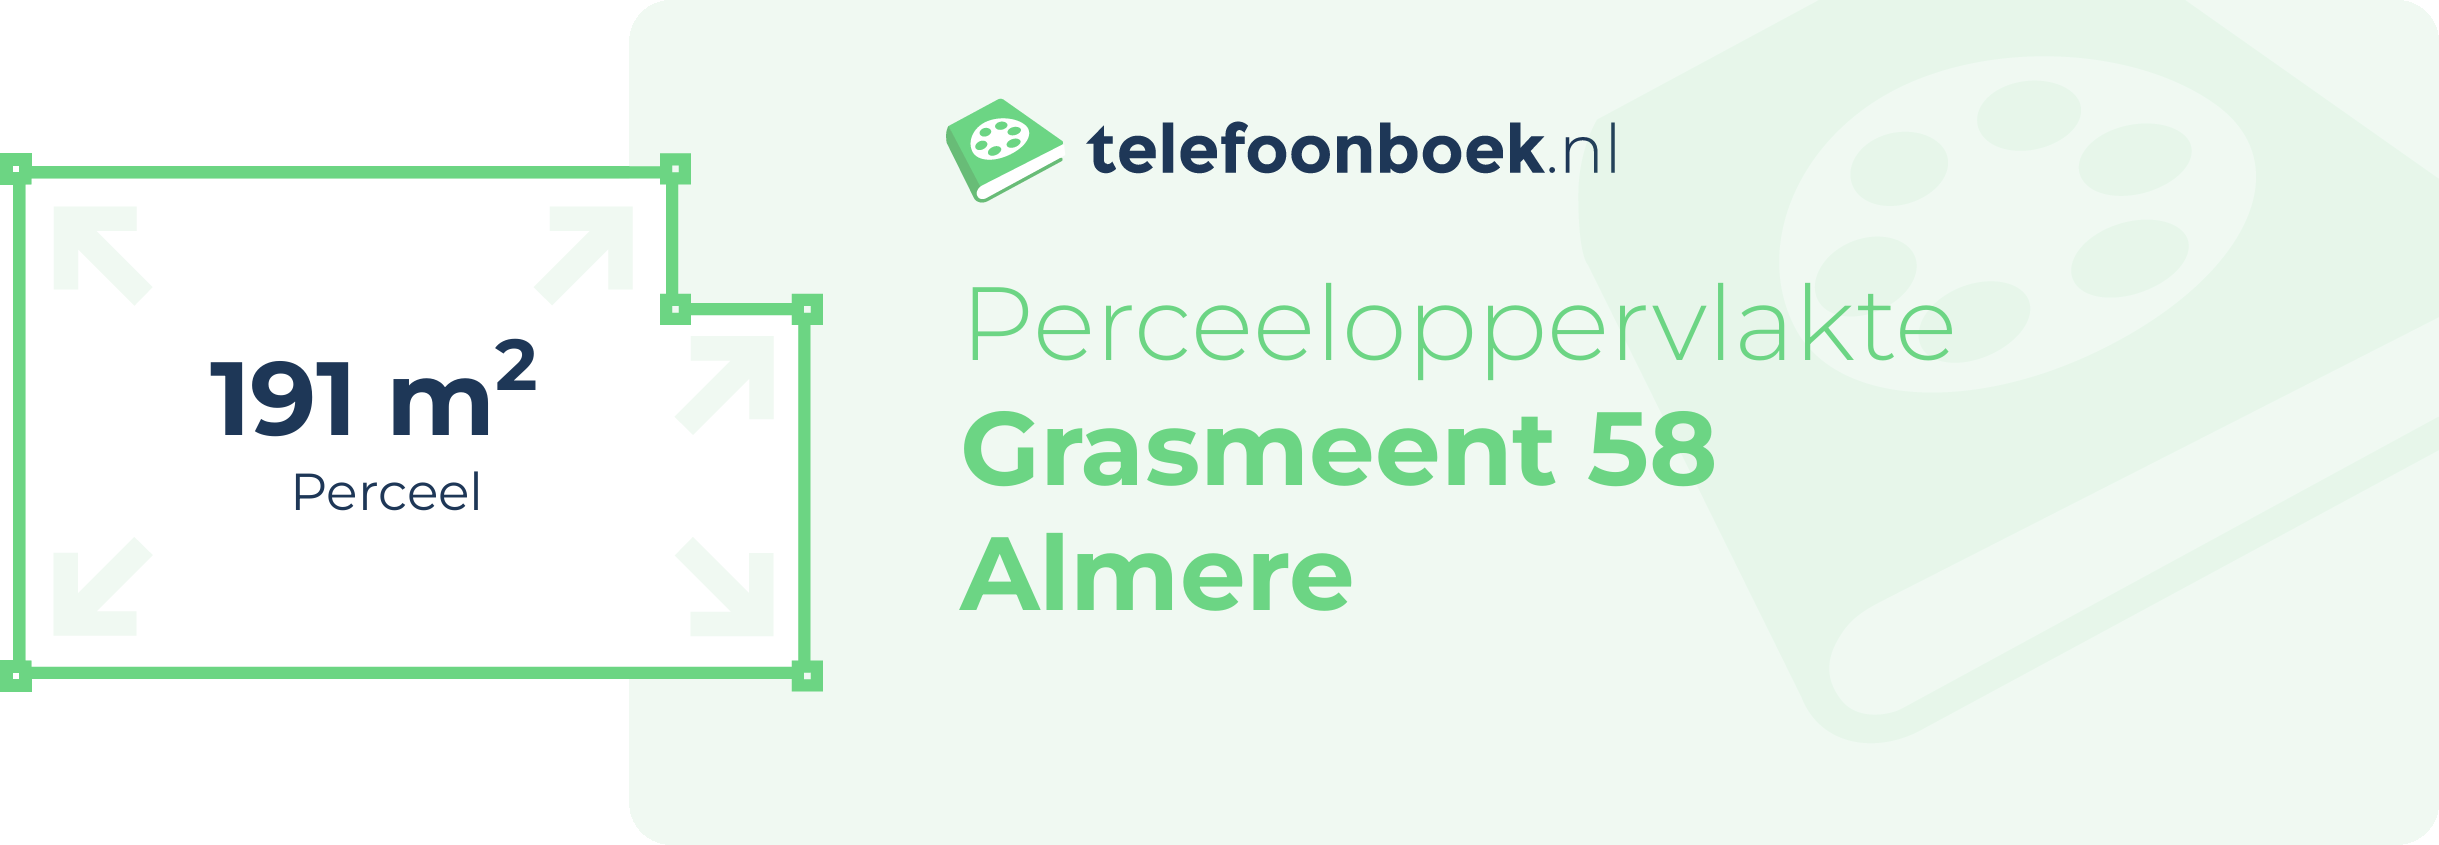 Perceeloppervlakte Grasmeent 58 Almere